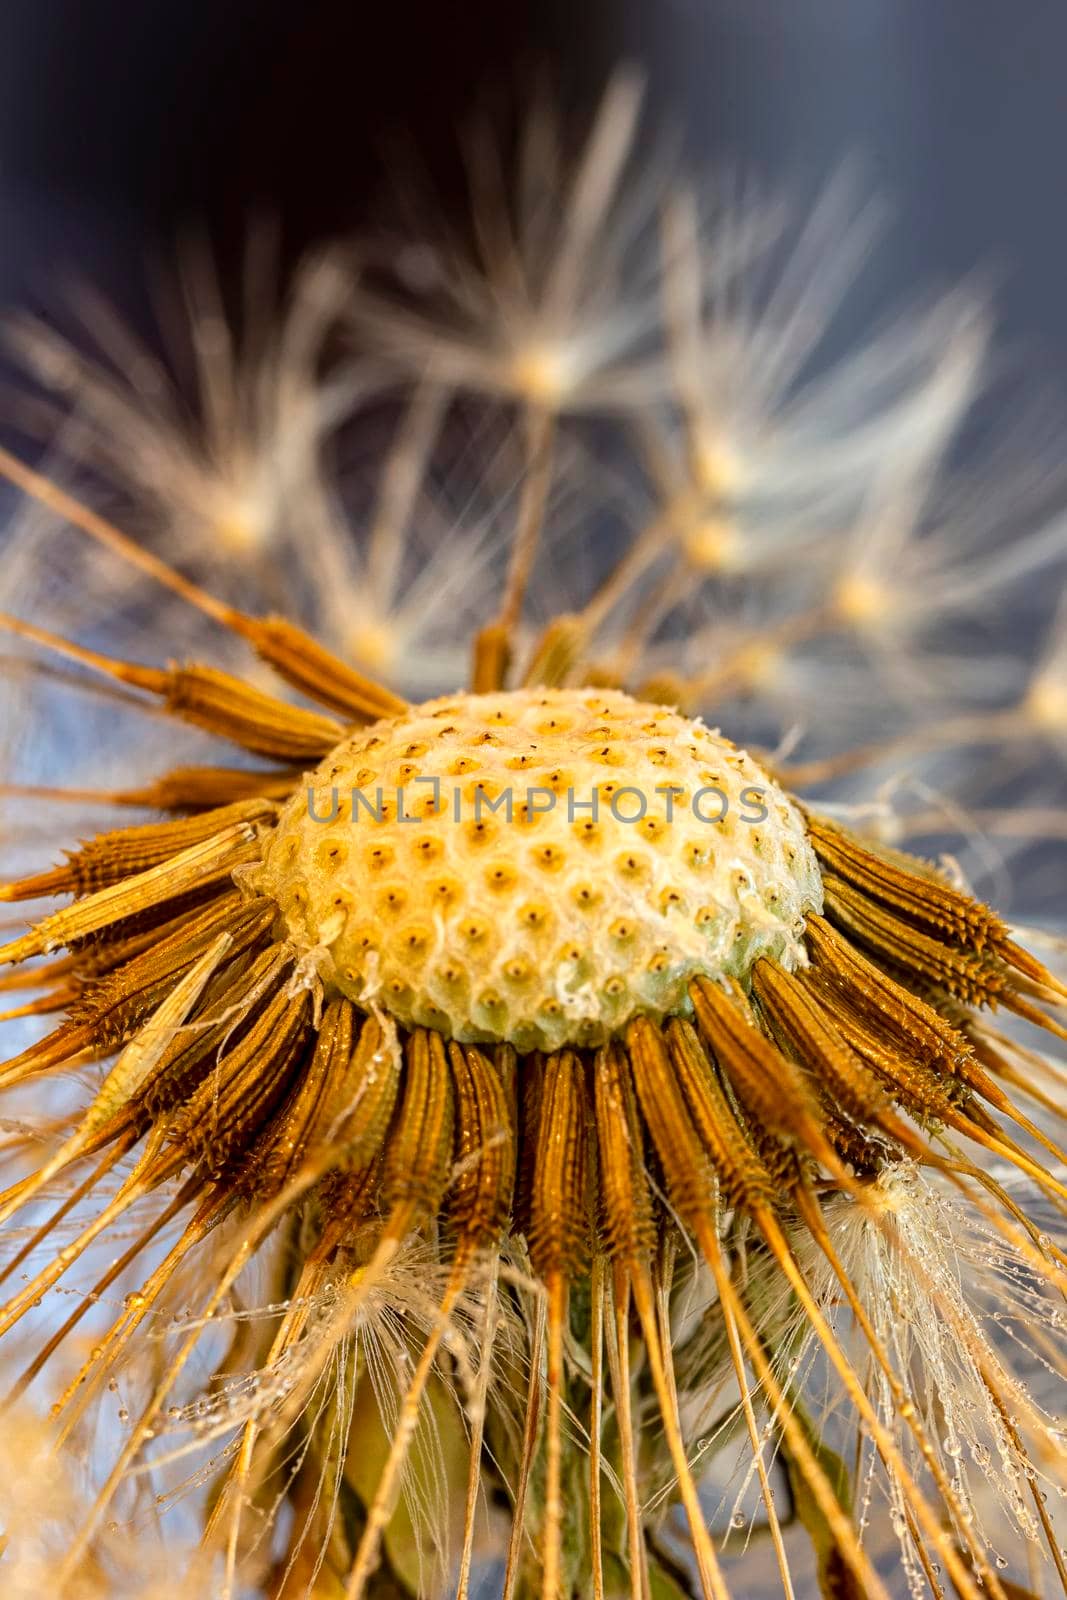 Amazing dandelion head close up. Vertical view